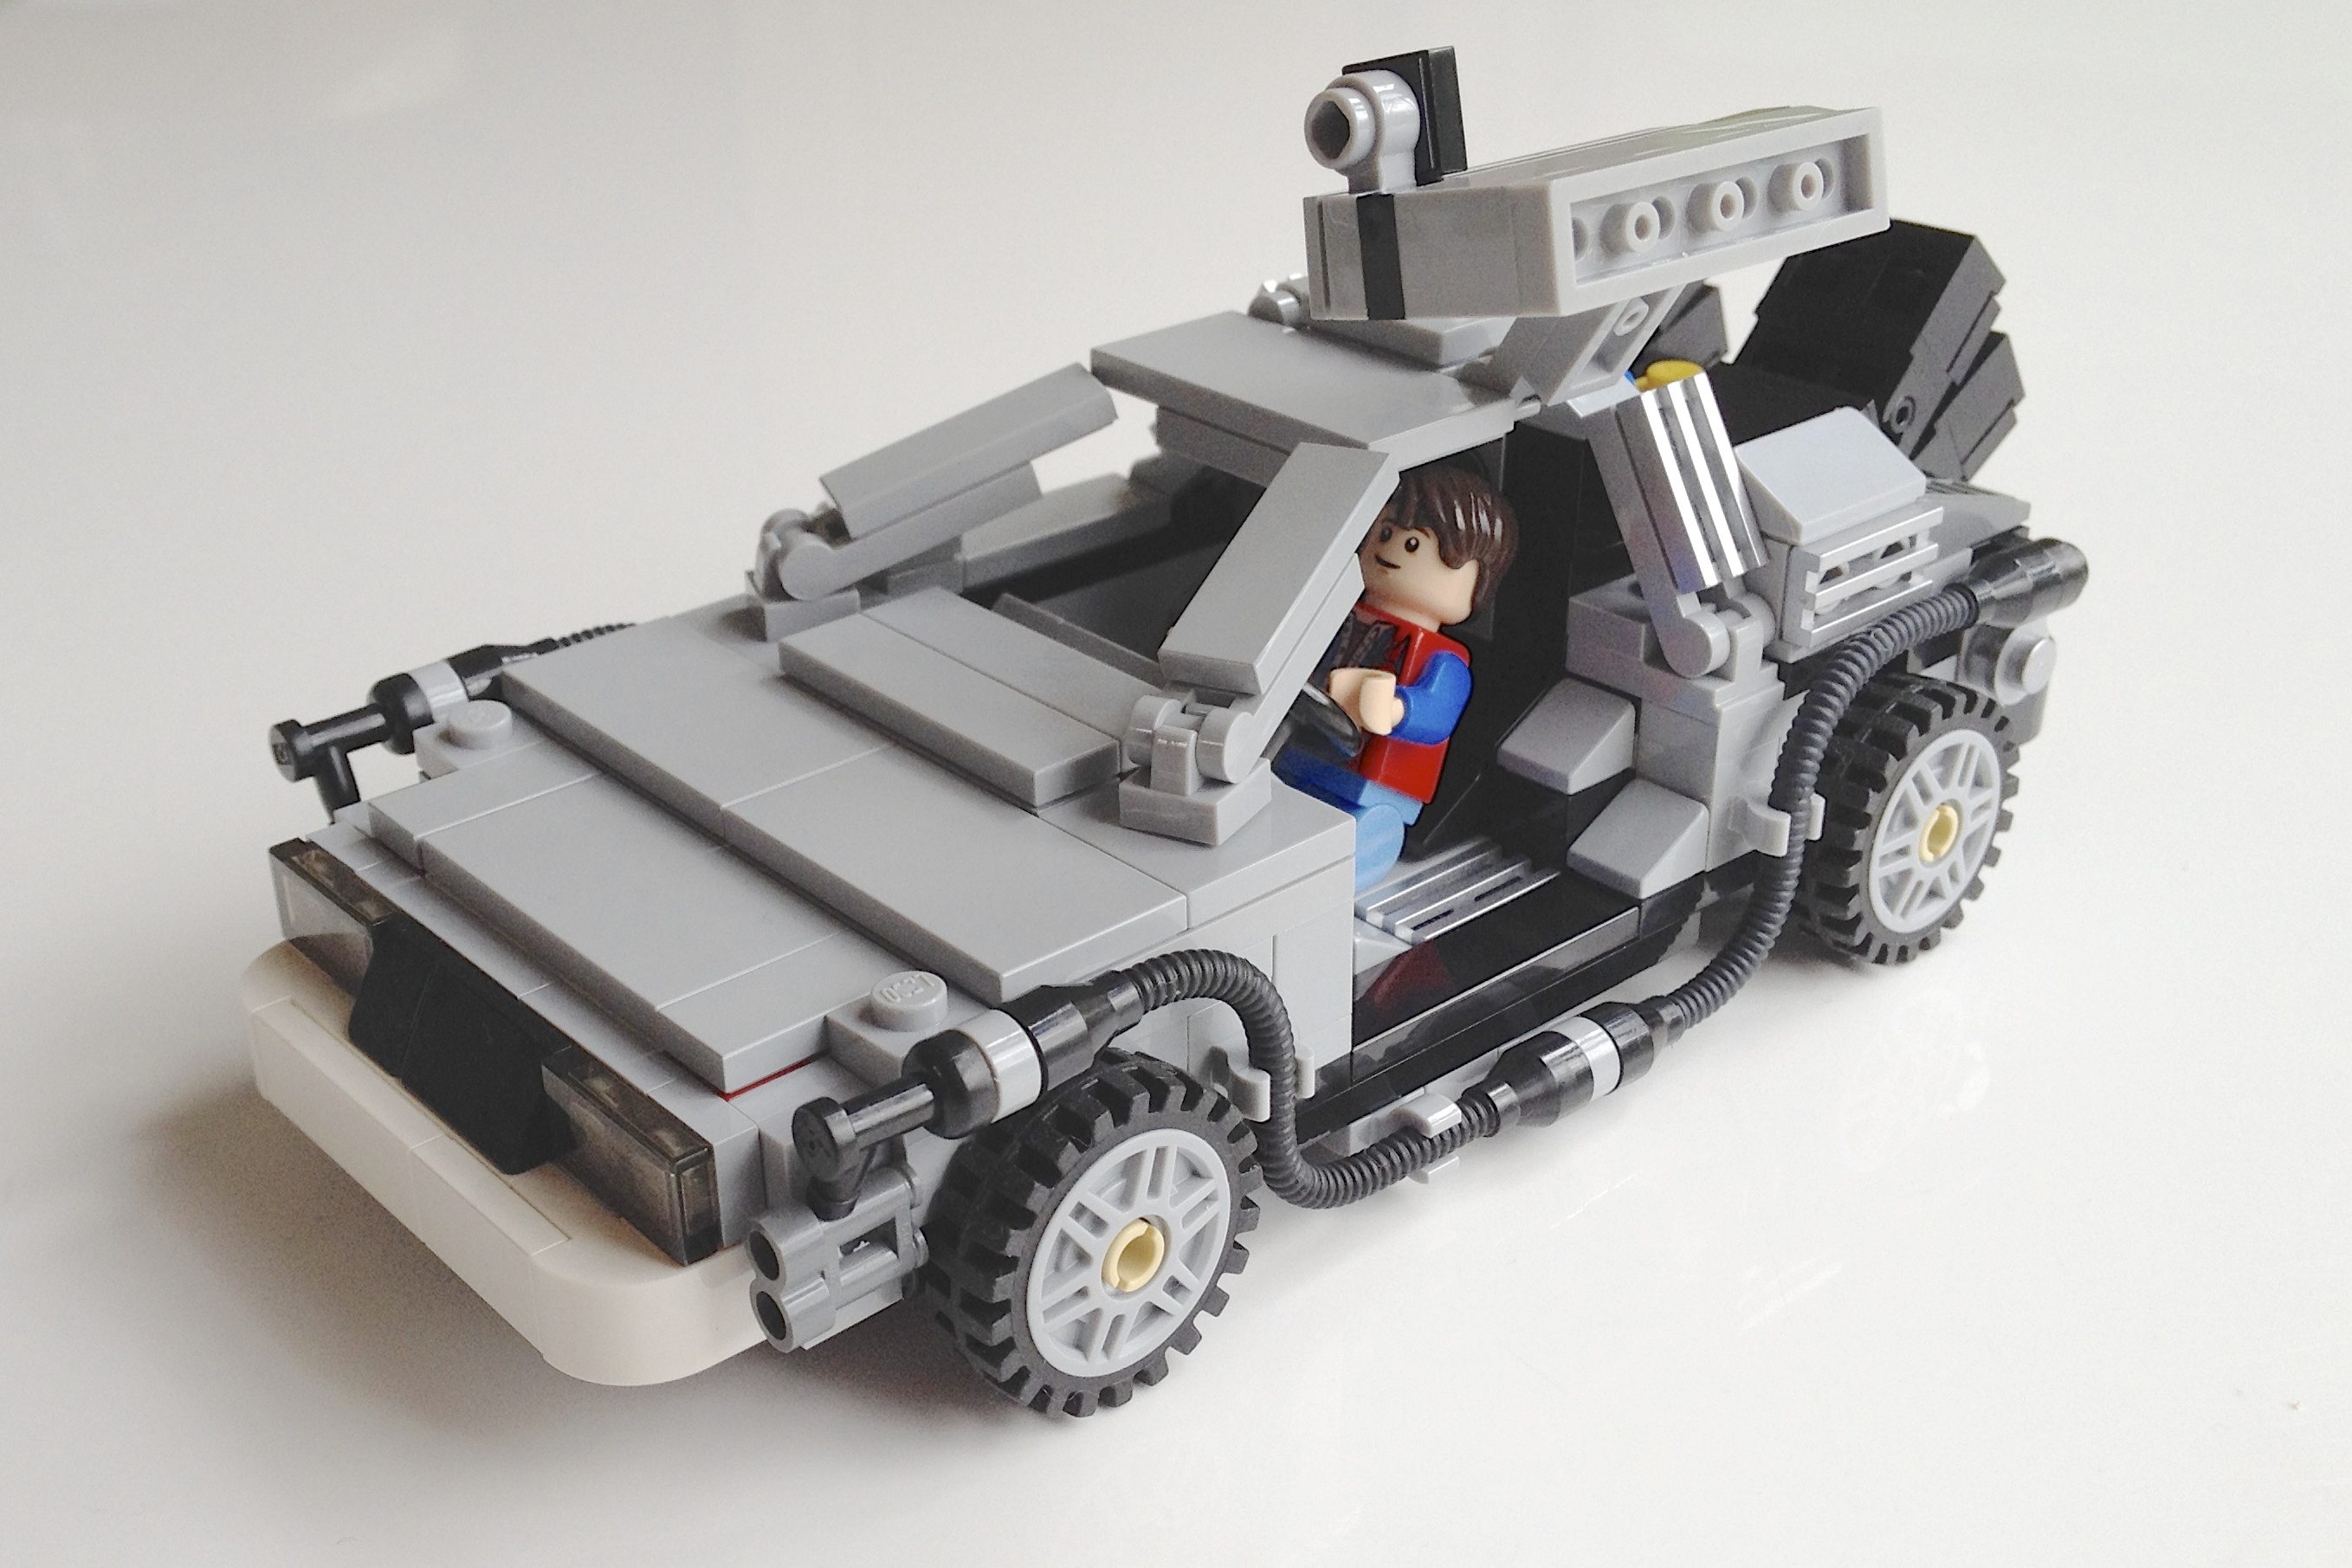 The Lego Cuusoo DeLorean